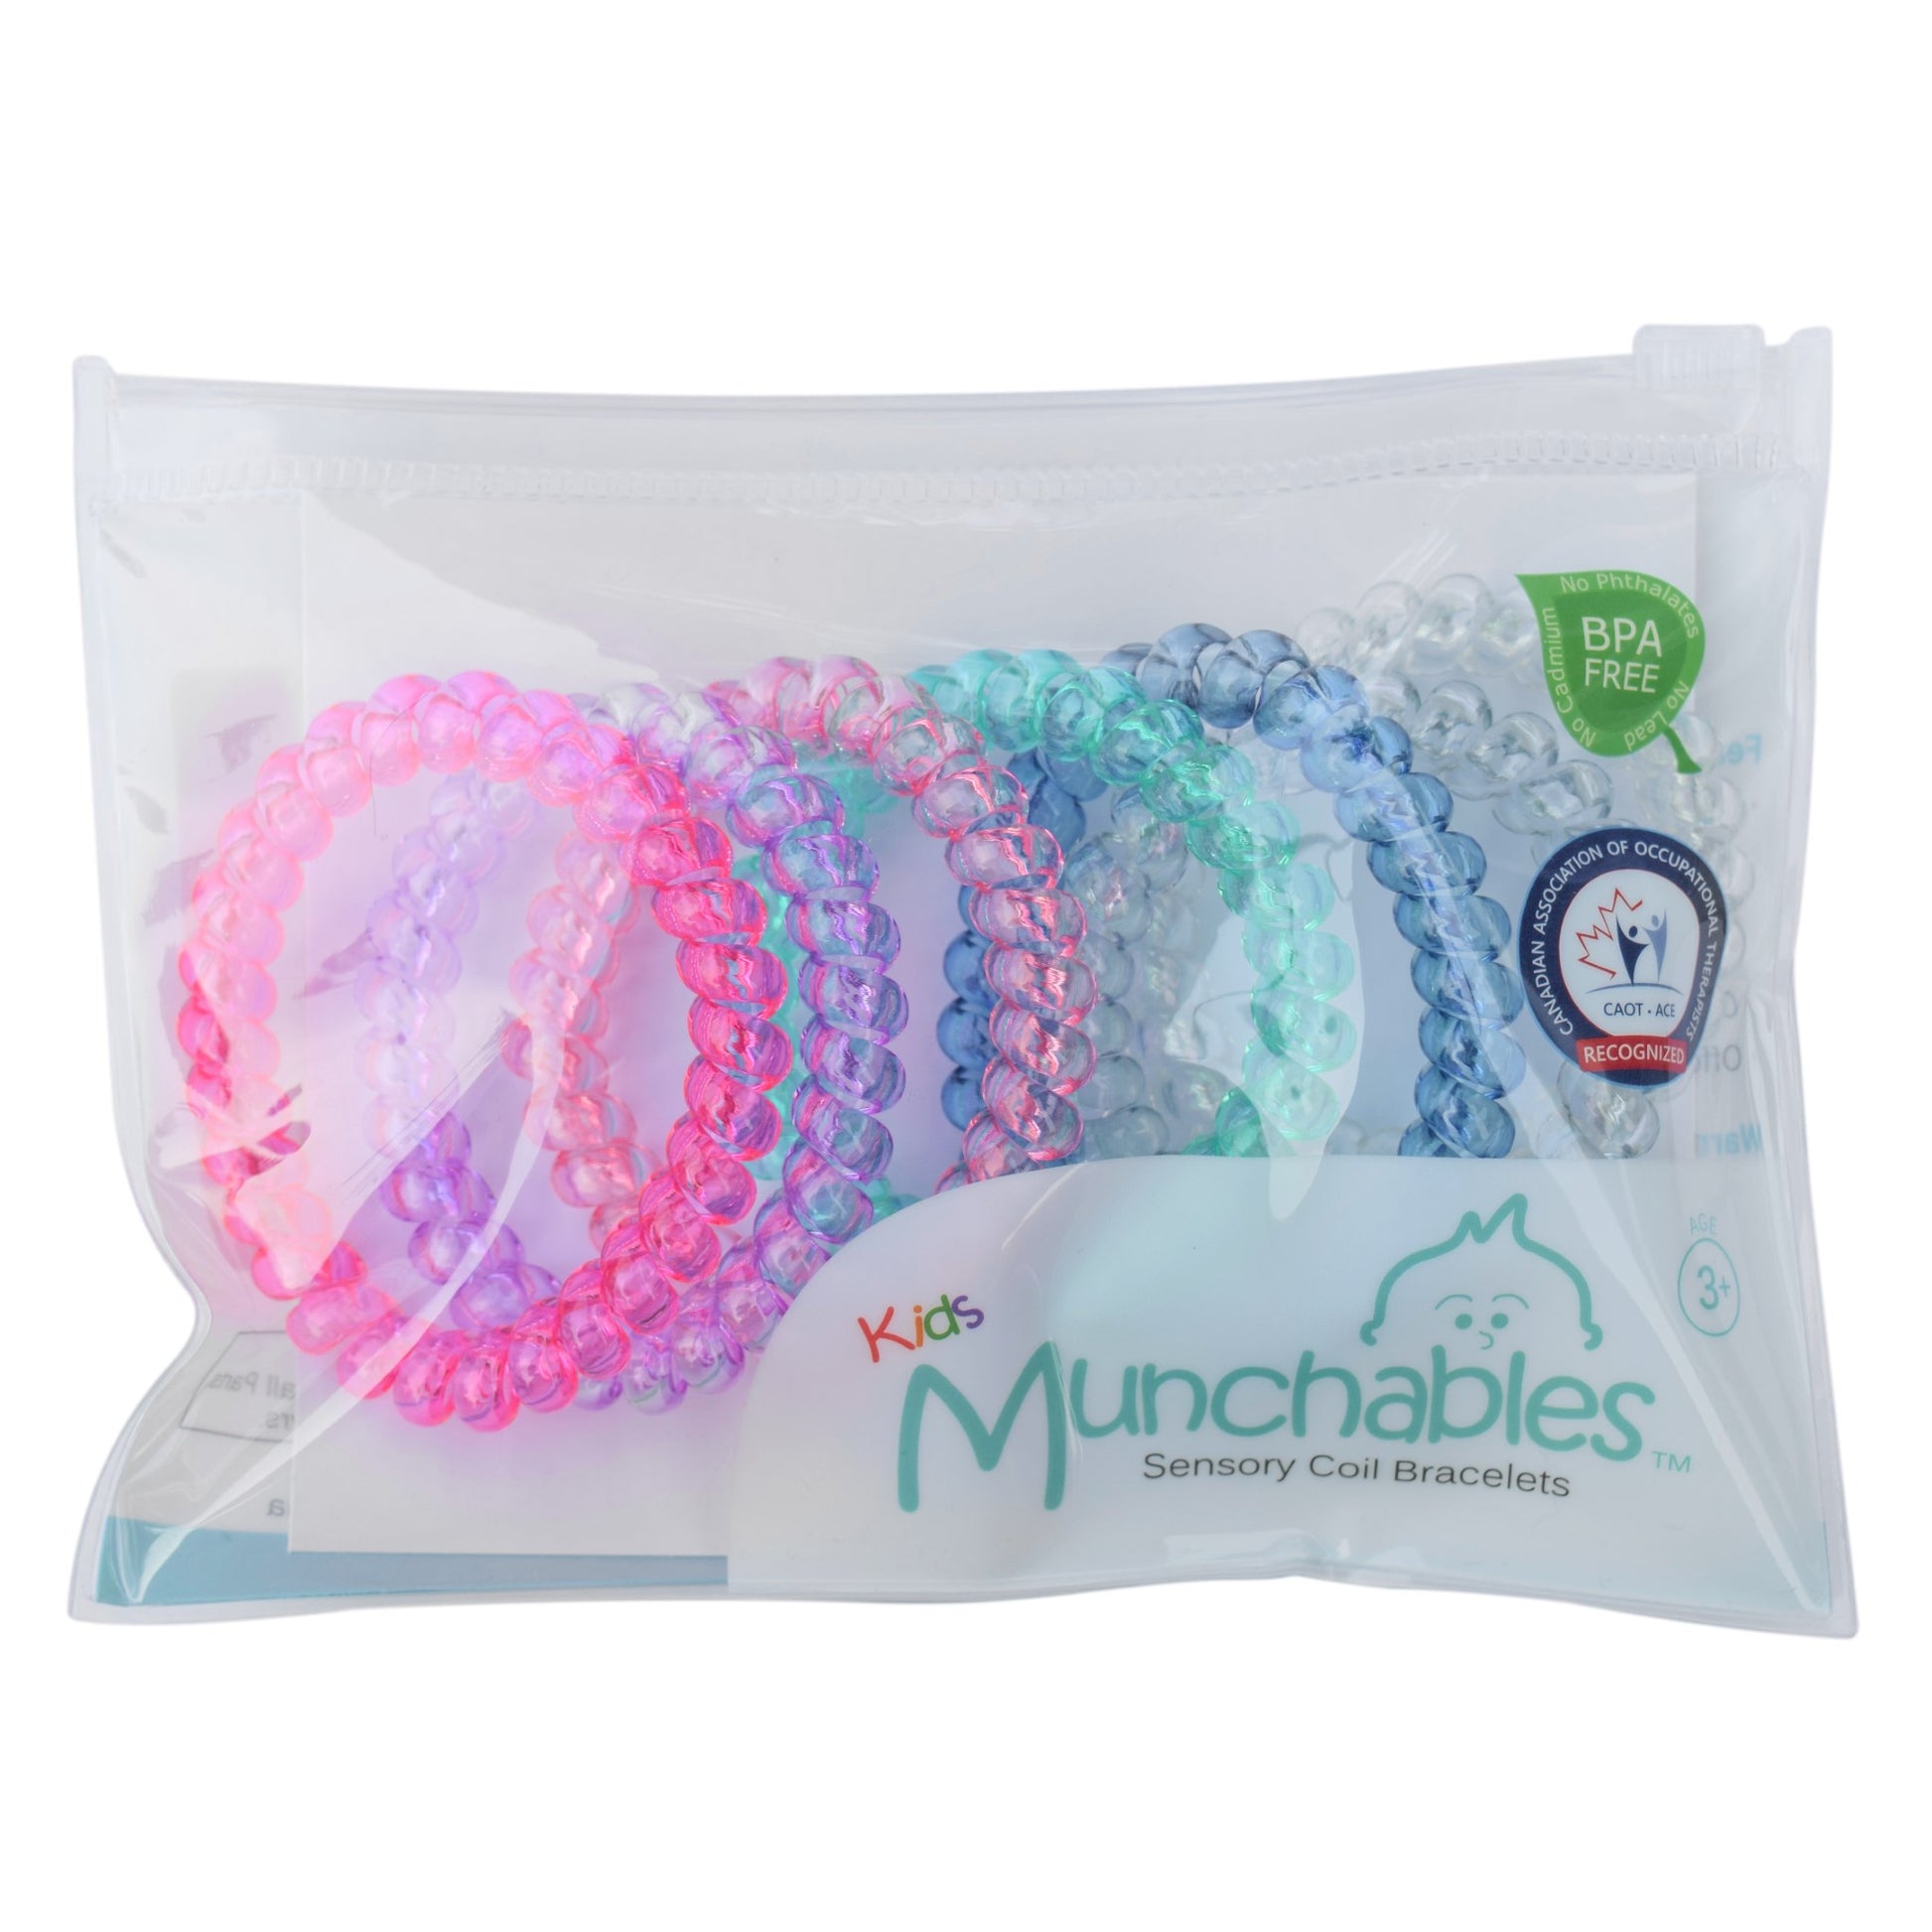 Munchables coil fidget bracelets in package.